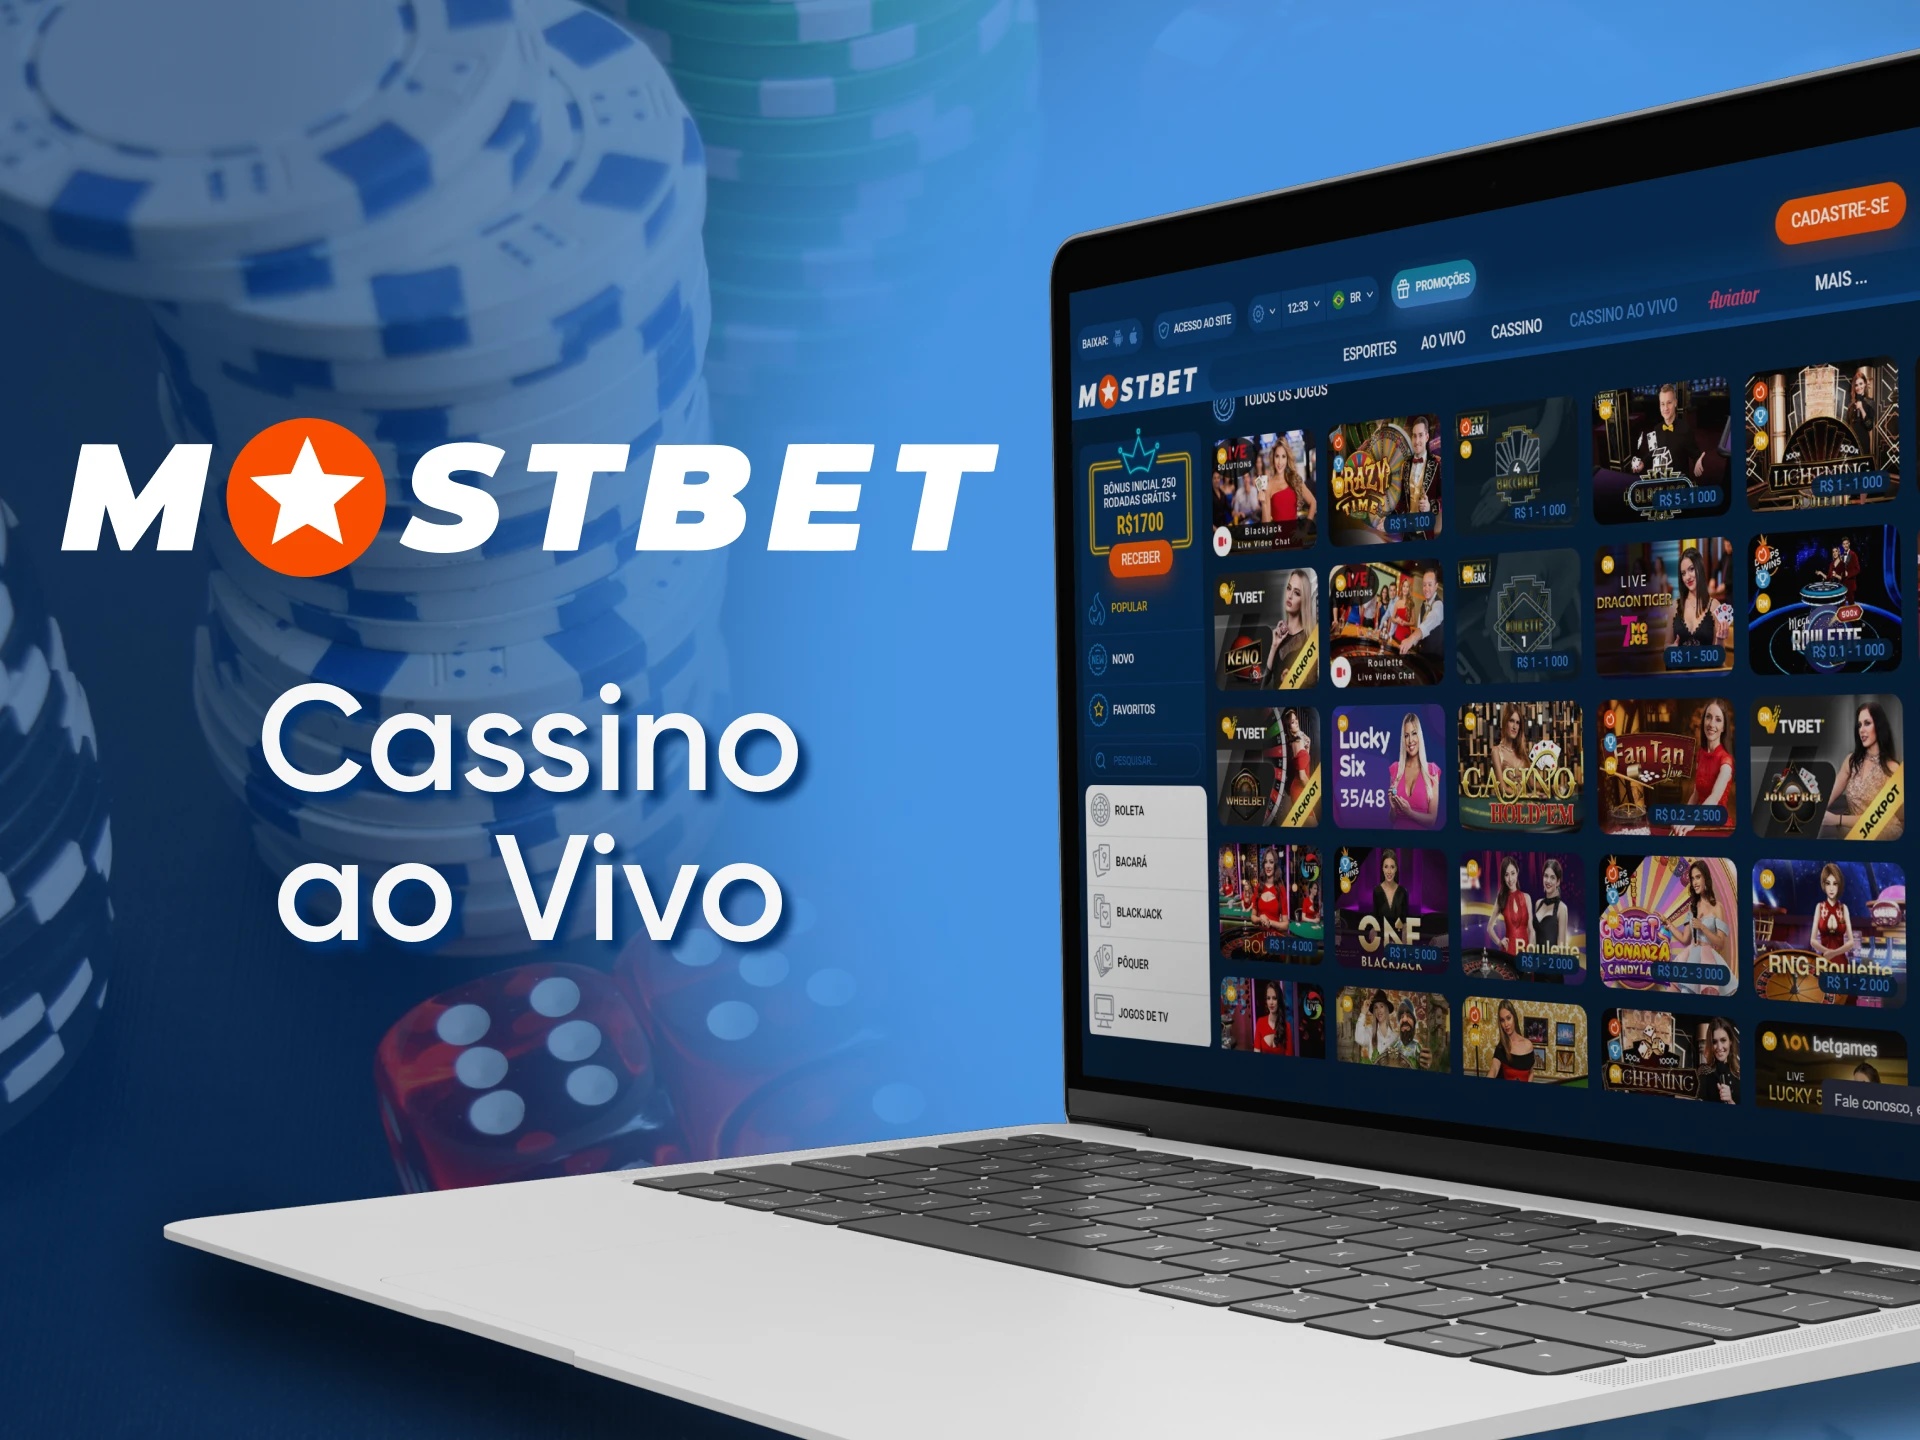 Mostbet online casino supports live dealer games.